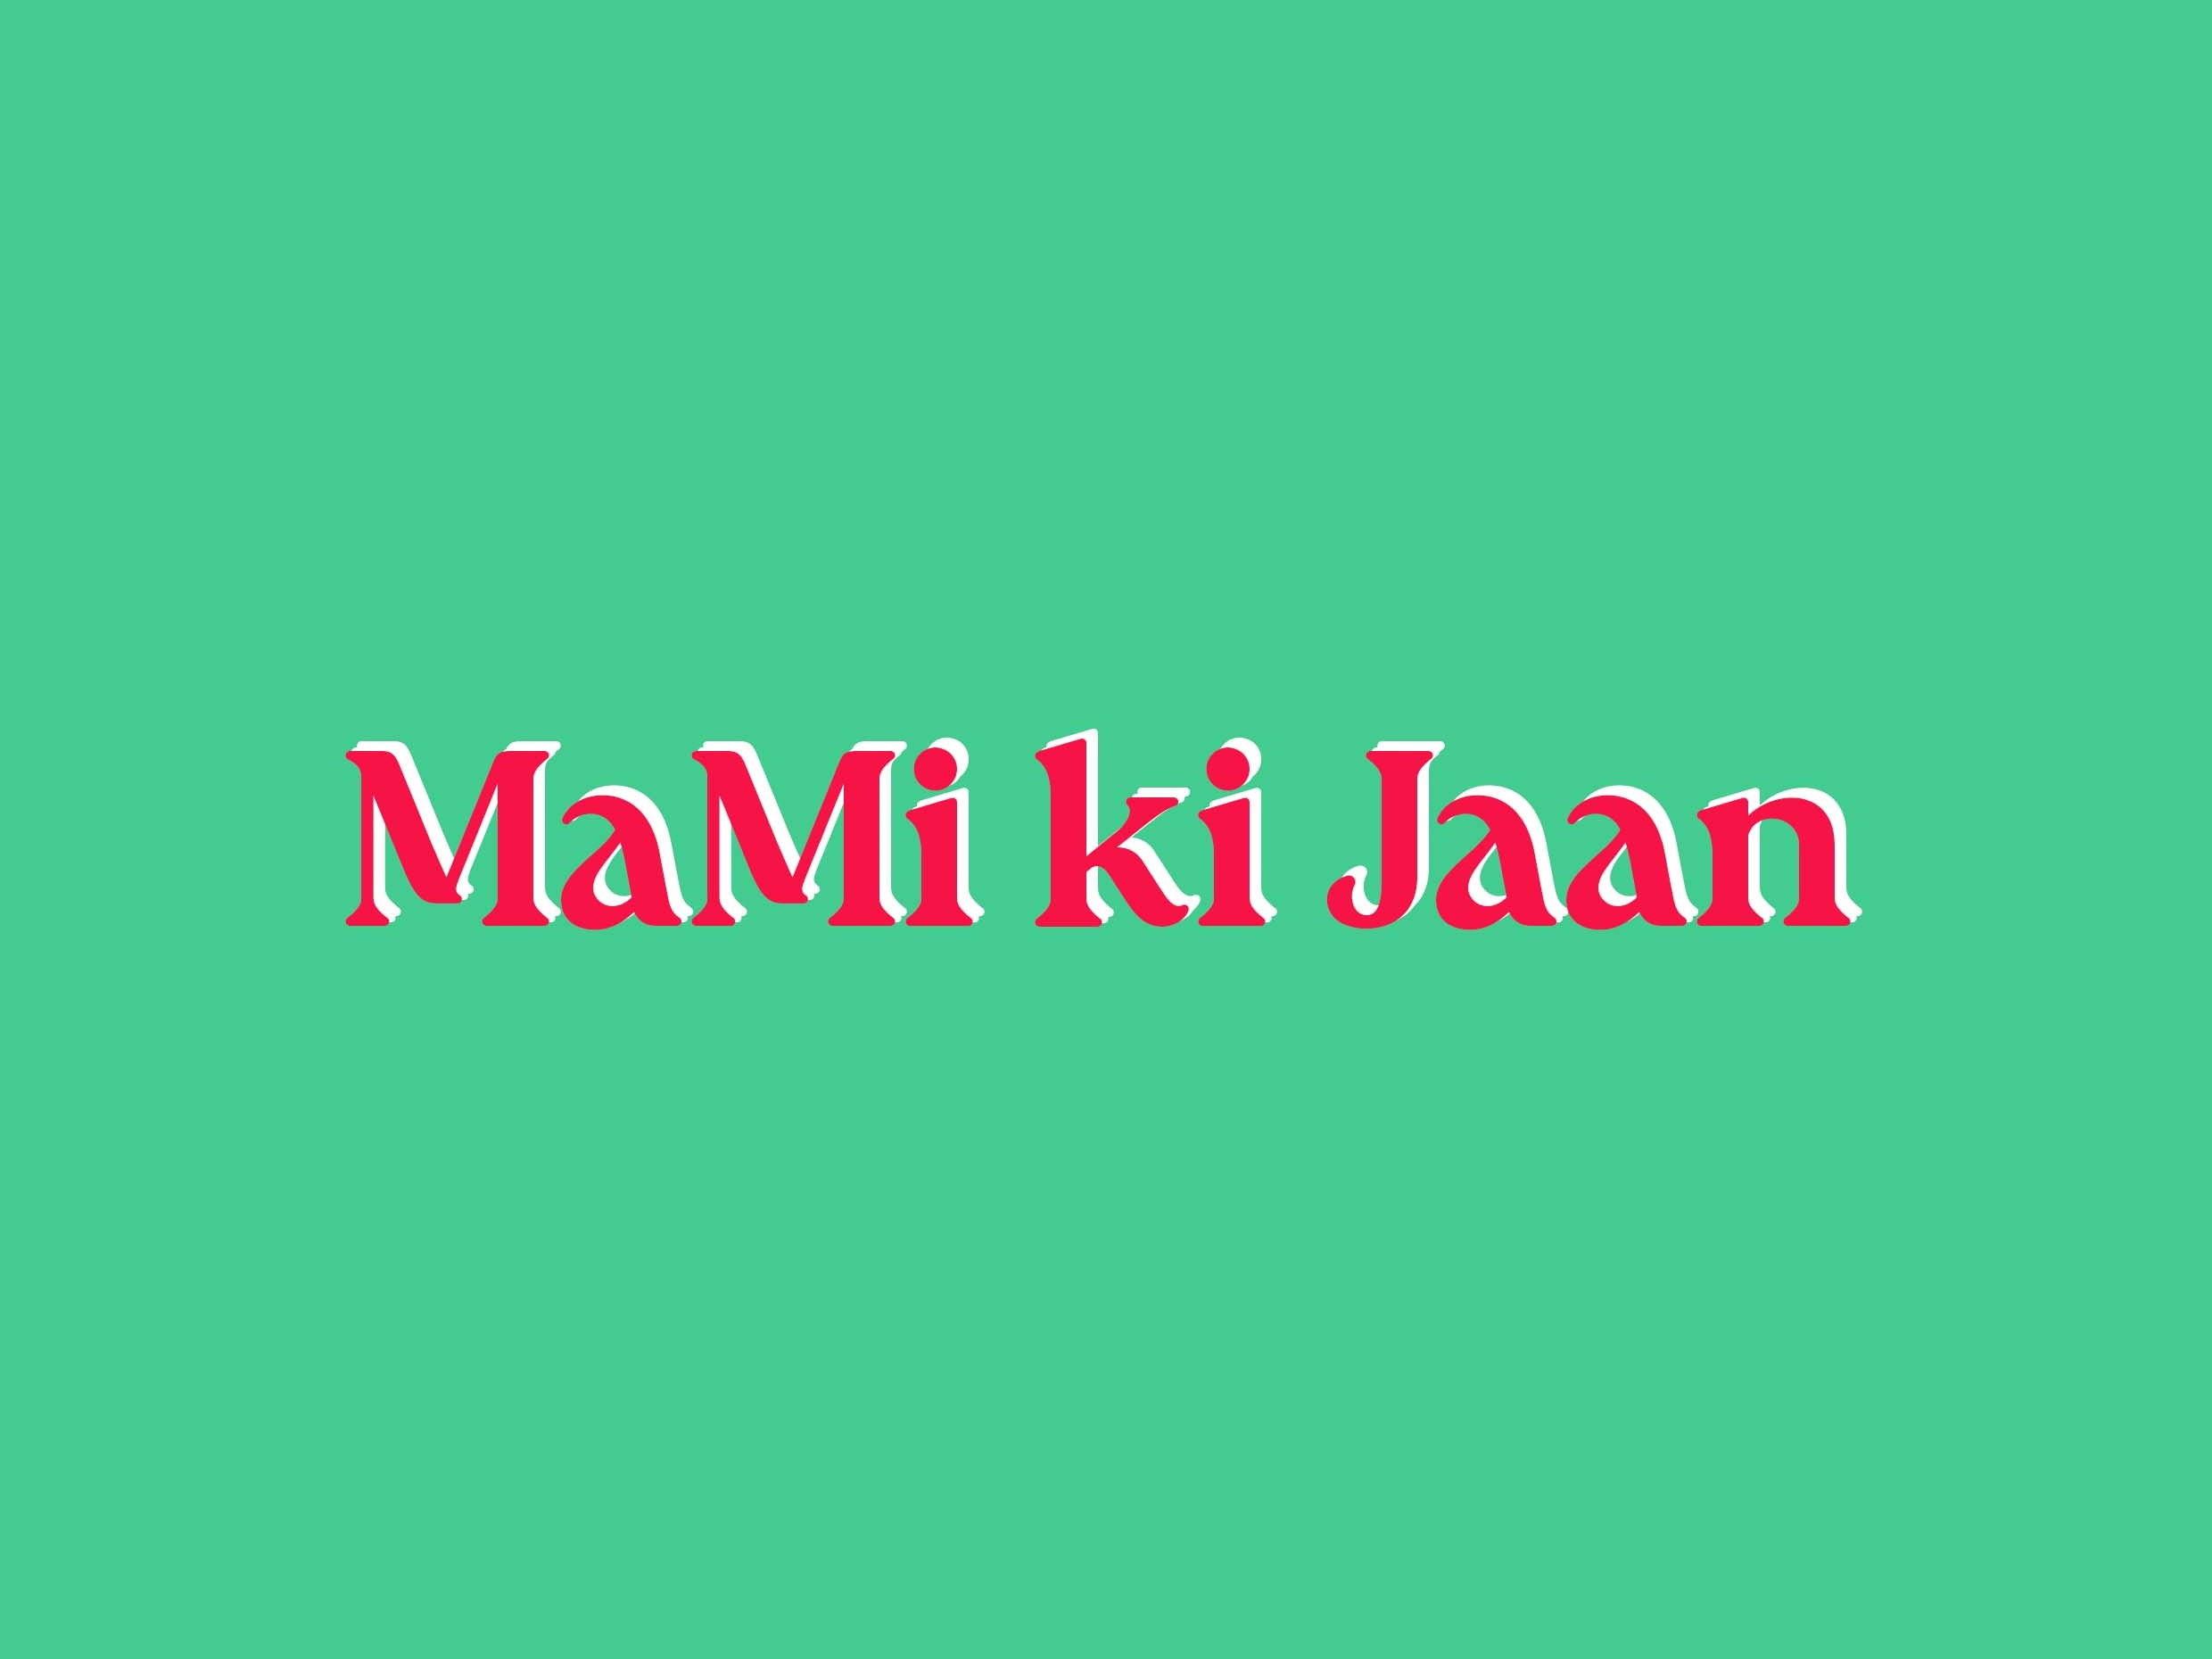 Mami-ki-jaan-green.jpg